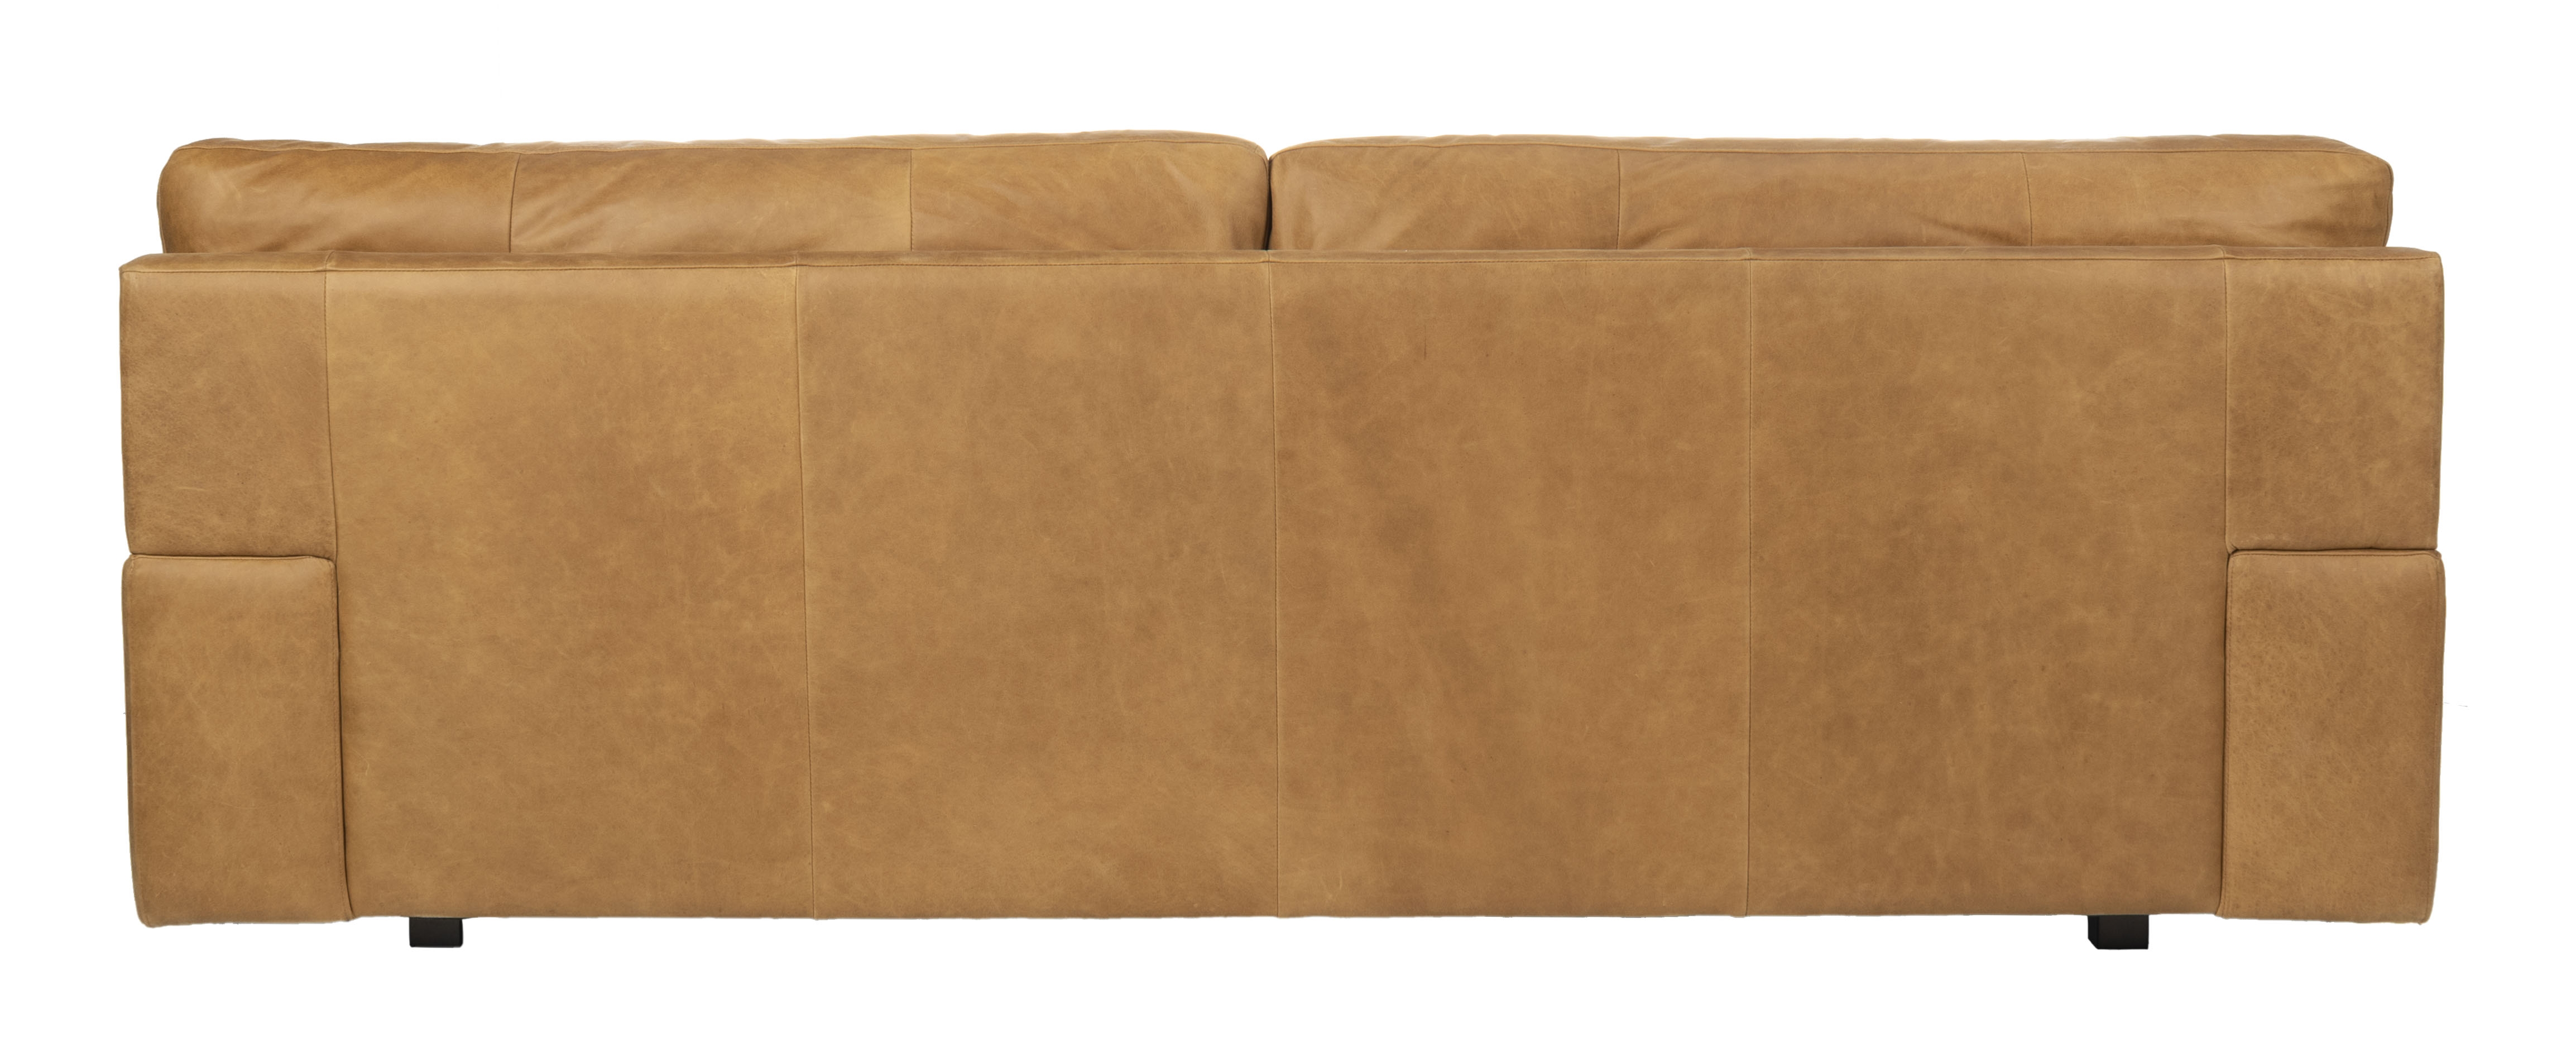 Sampson Italian Leather Sofa - Light Brown - Arlo Home - Image 5